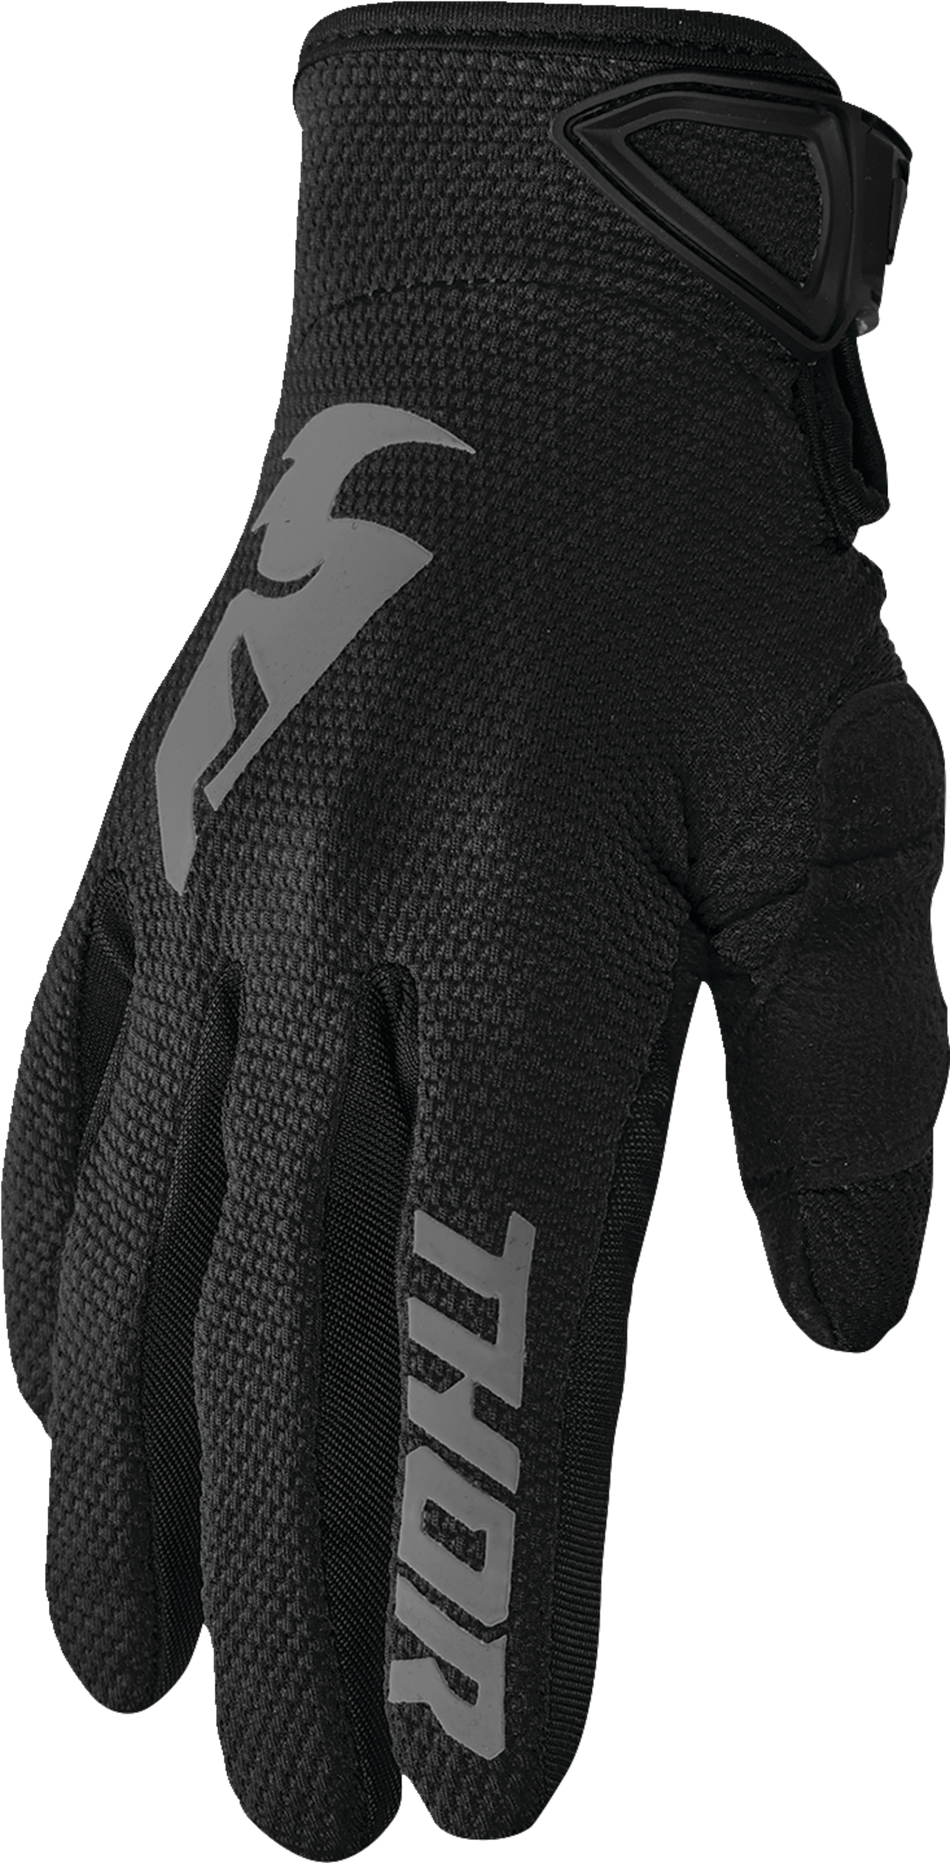 THOR Sector Gloves - Black/Gray - Medium 3330-7251